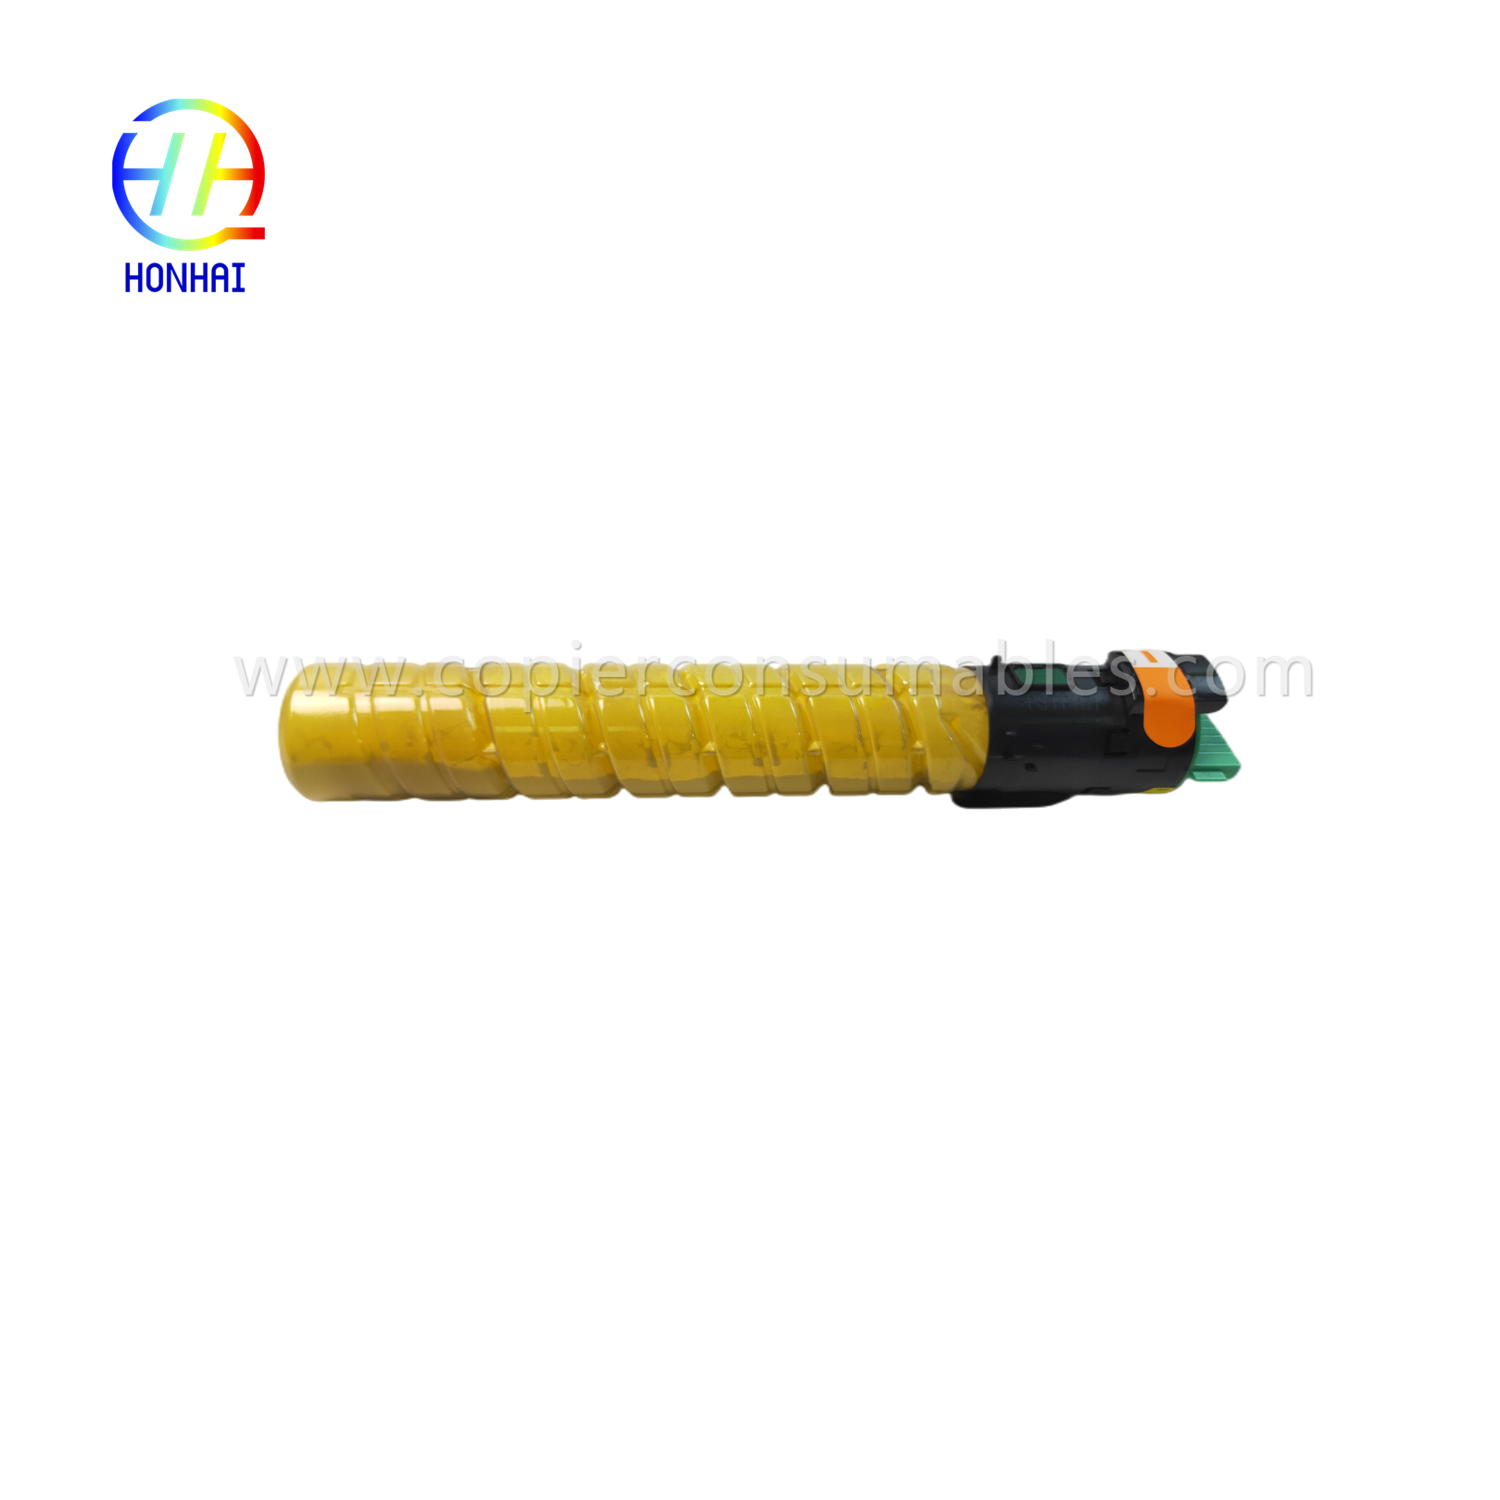 https://www.copierconsumables.com/toner-cartridge-yellow-for-ricoh-aficio-mpc2051-mpc2551-841501-product/